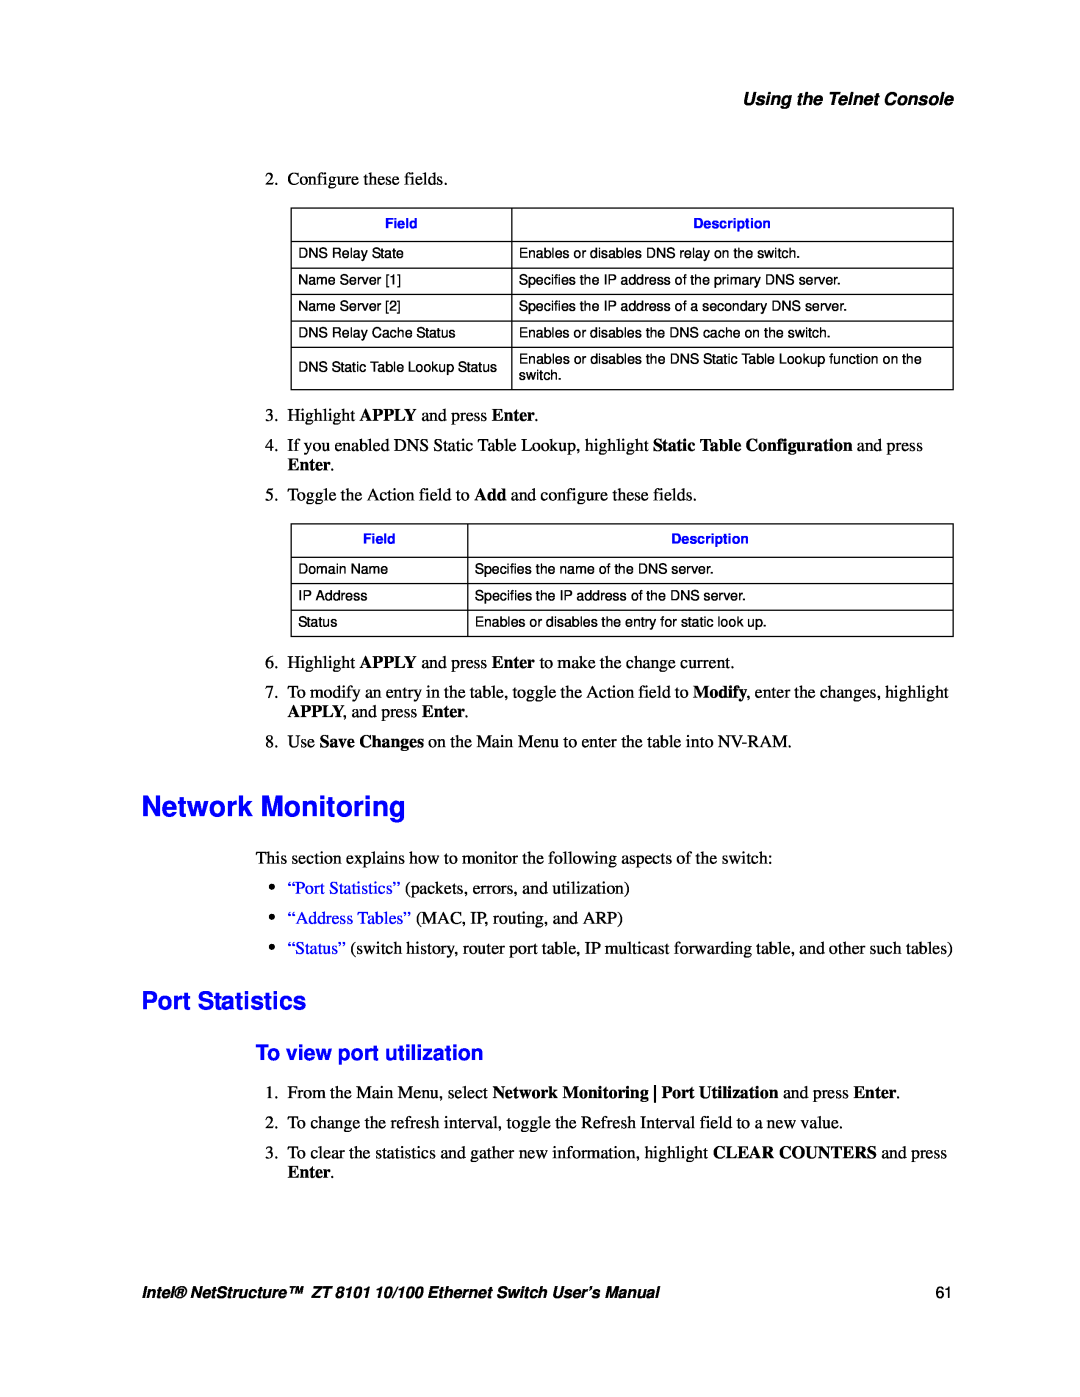 Intel ZT 8101 10/100 user manual Network Monitoring, Port Statistics, To view port utilization, Using the Telnet Console 